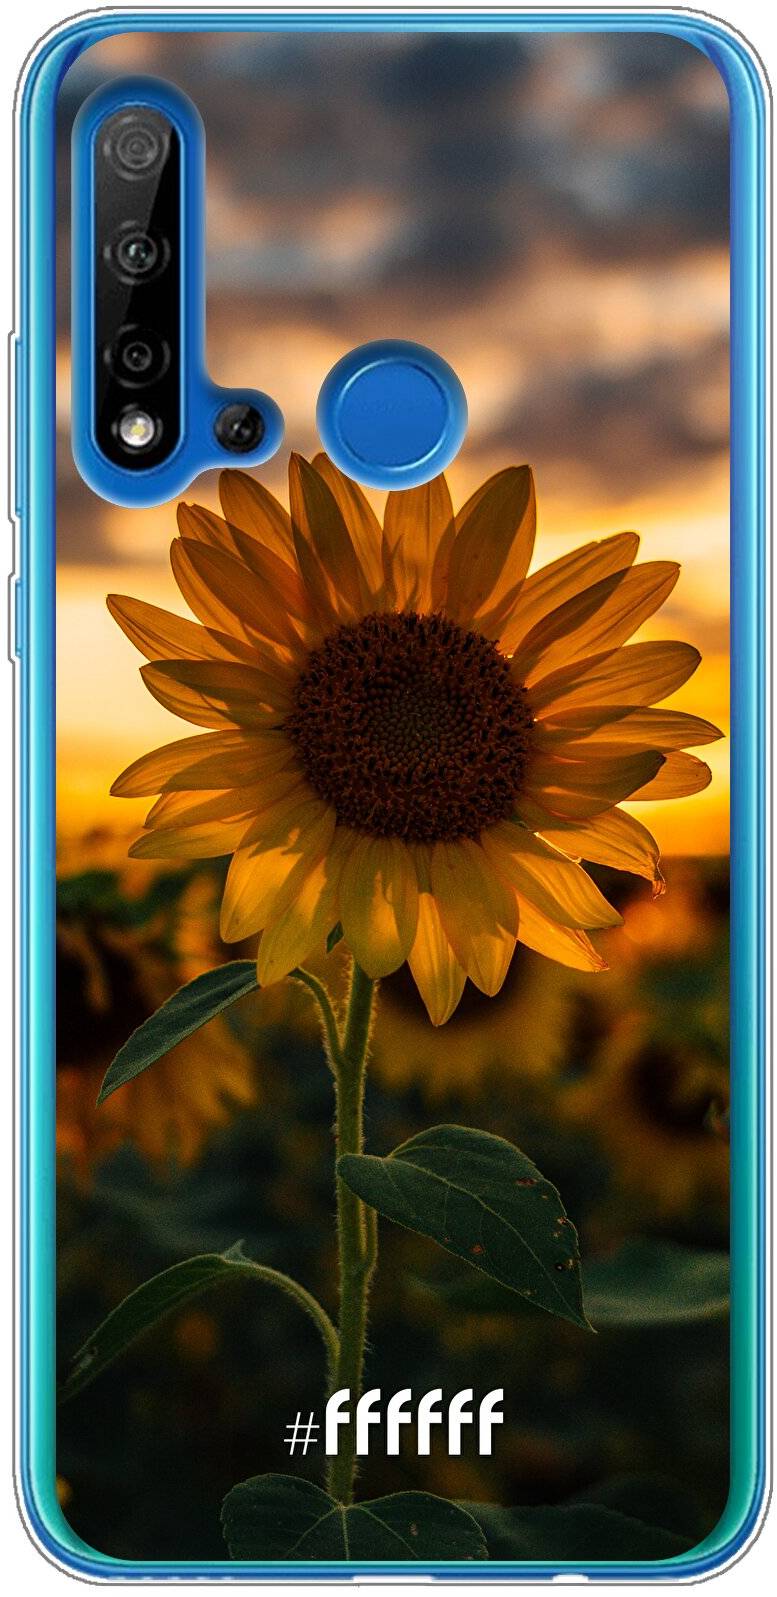 Sunset Sunflower P20 Lite (2019)